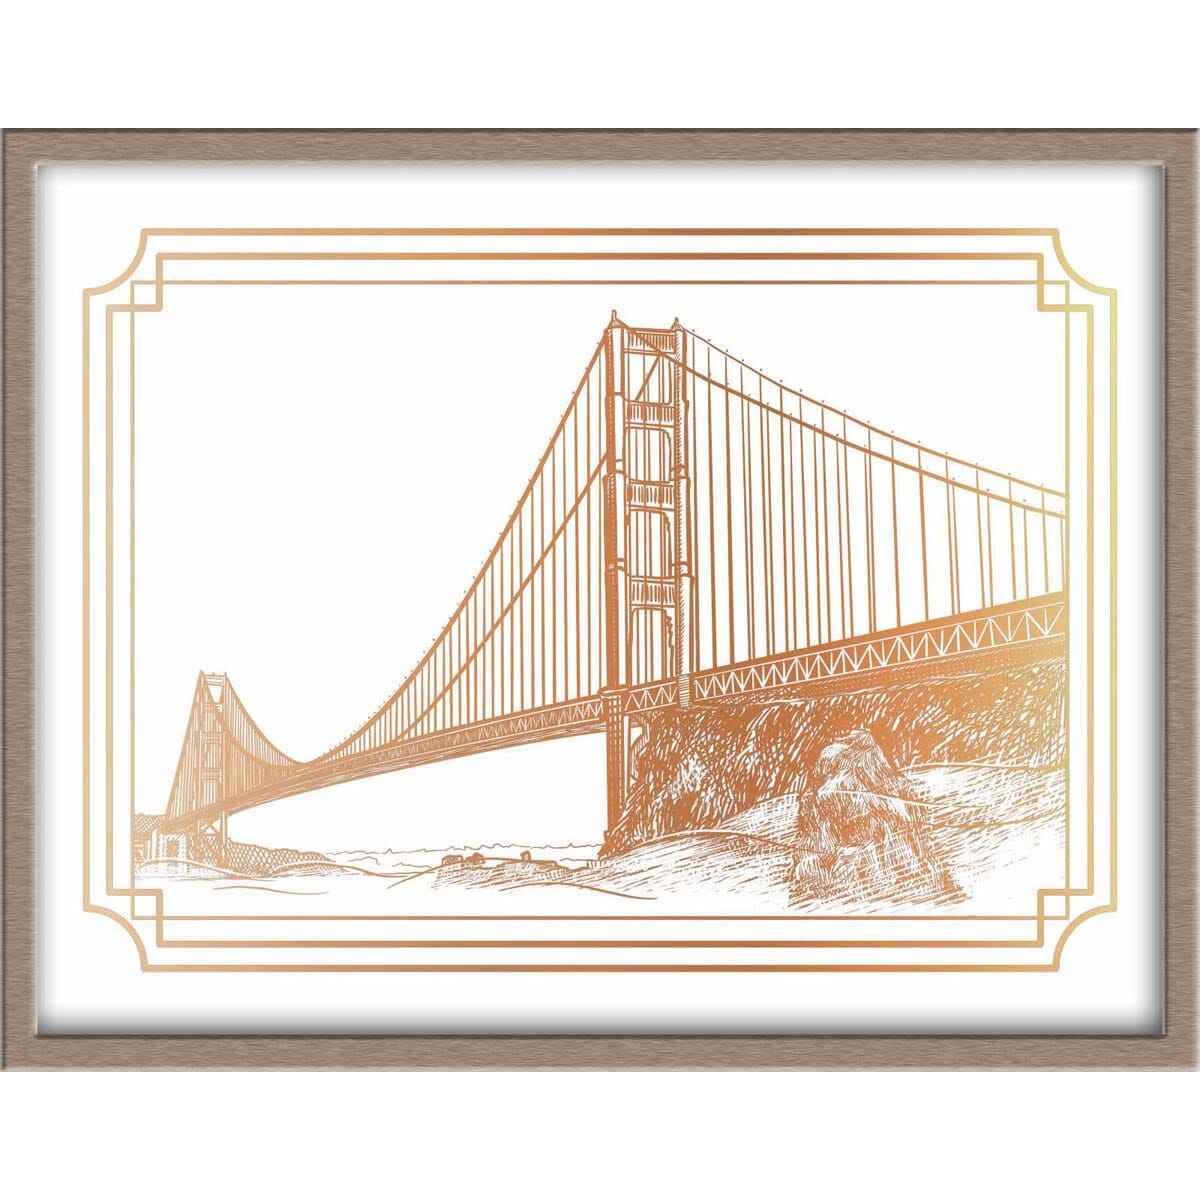 San Francisco's Golden Gate Bridge Landmark Foiled Print Posters, Prints, & Visual Artwork JoyousJoyfulJoyness 